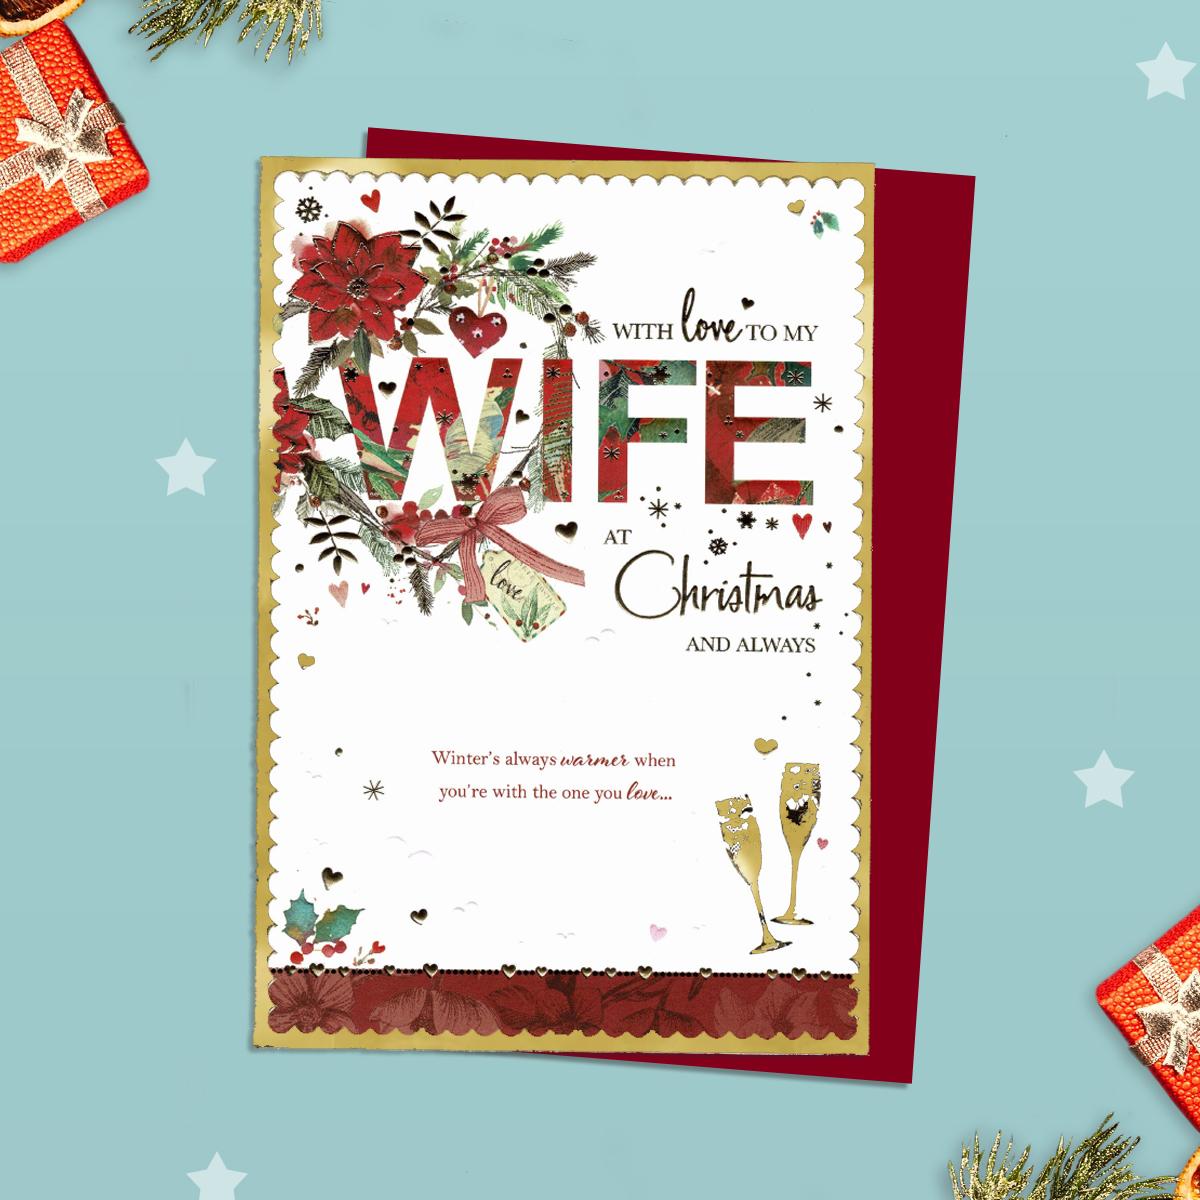 Wife Festive Christmas Card Alongside Its Red Envelope